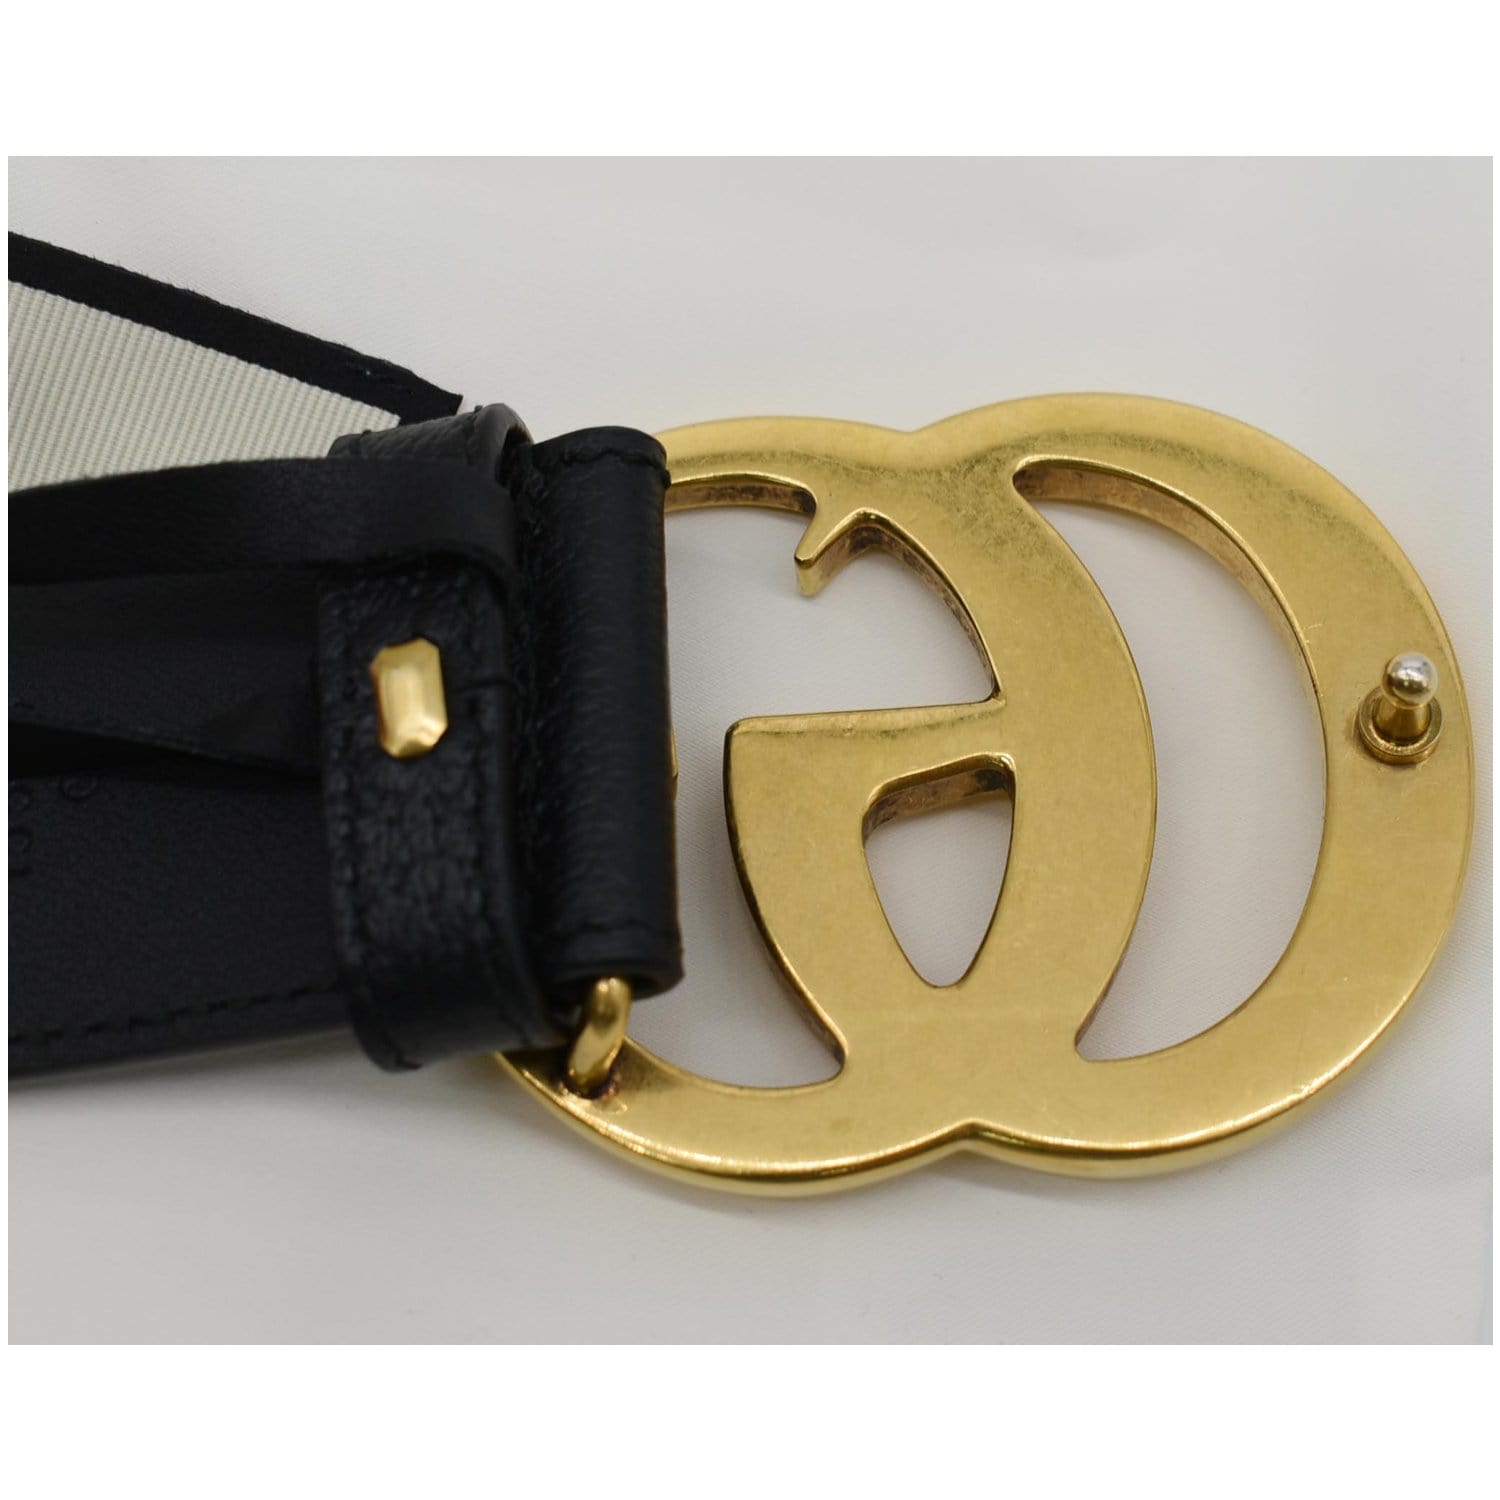 Gucci Black Leather Double G Belt Size 75/30